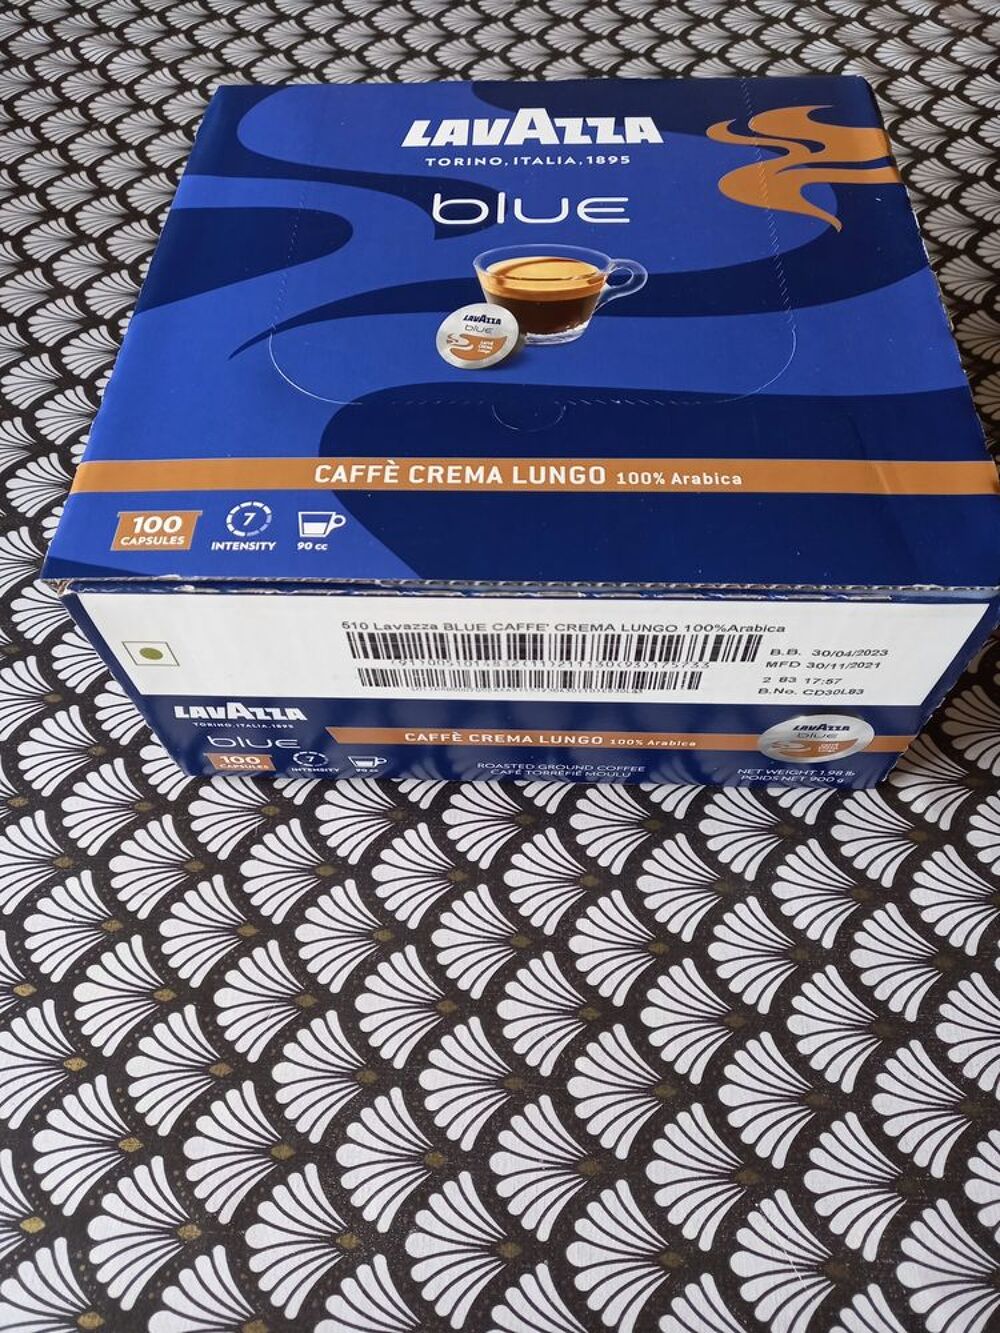 LAVAZZA BLUE boite cafe Electromnager